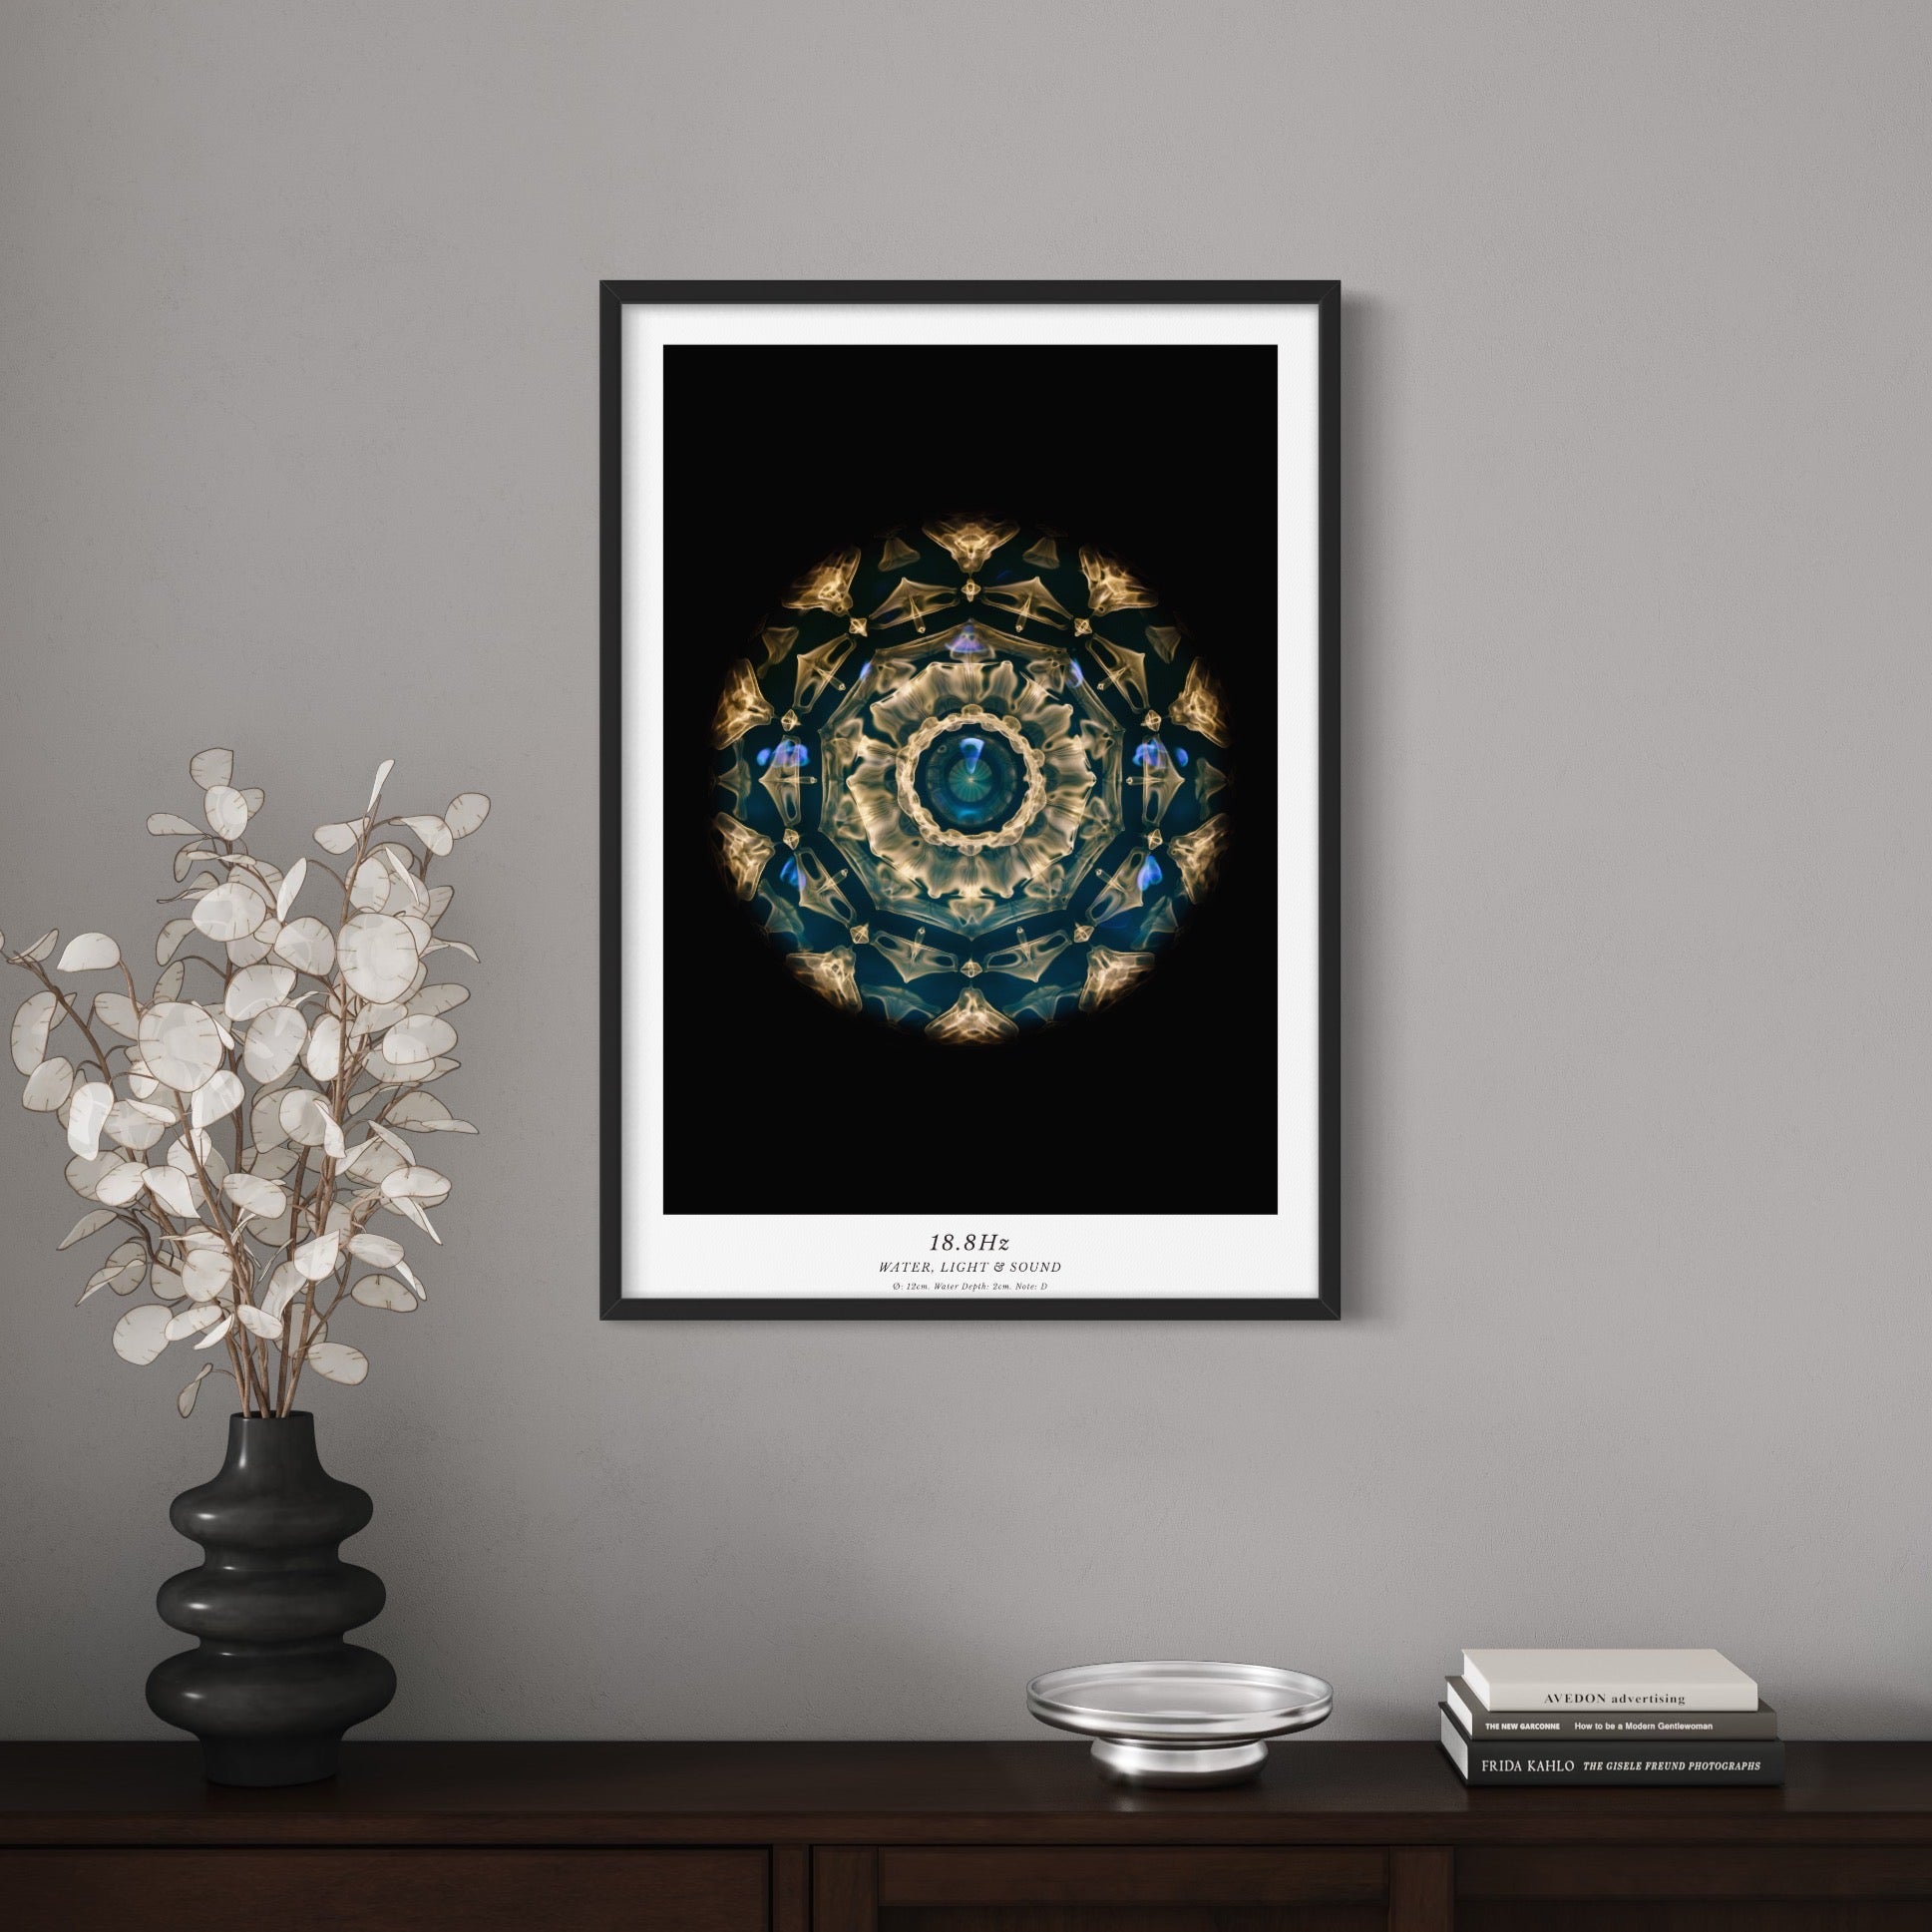 cymatics photo print 18.8Hz (Note D) - Journey of Curiosity